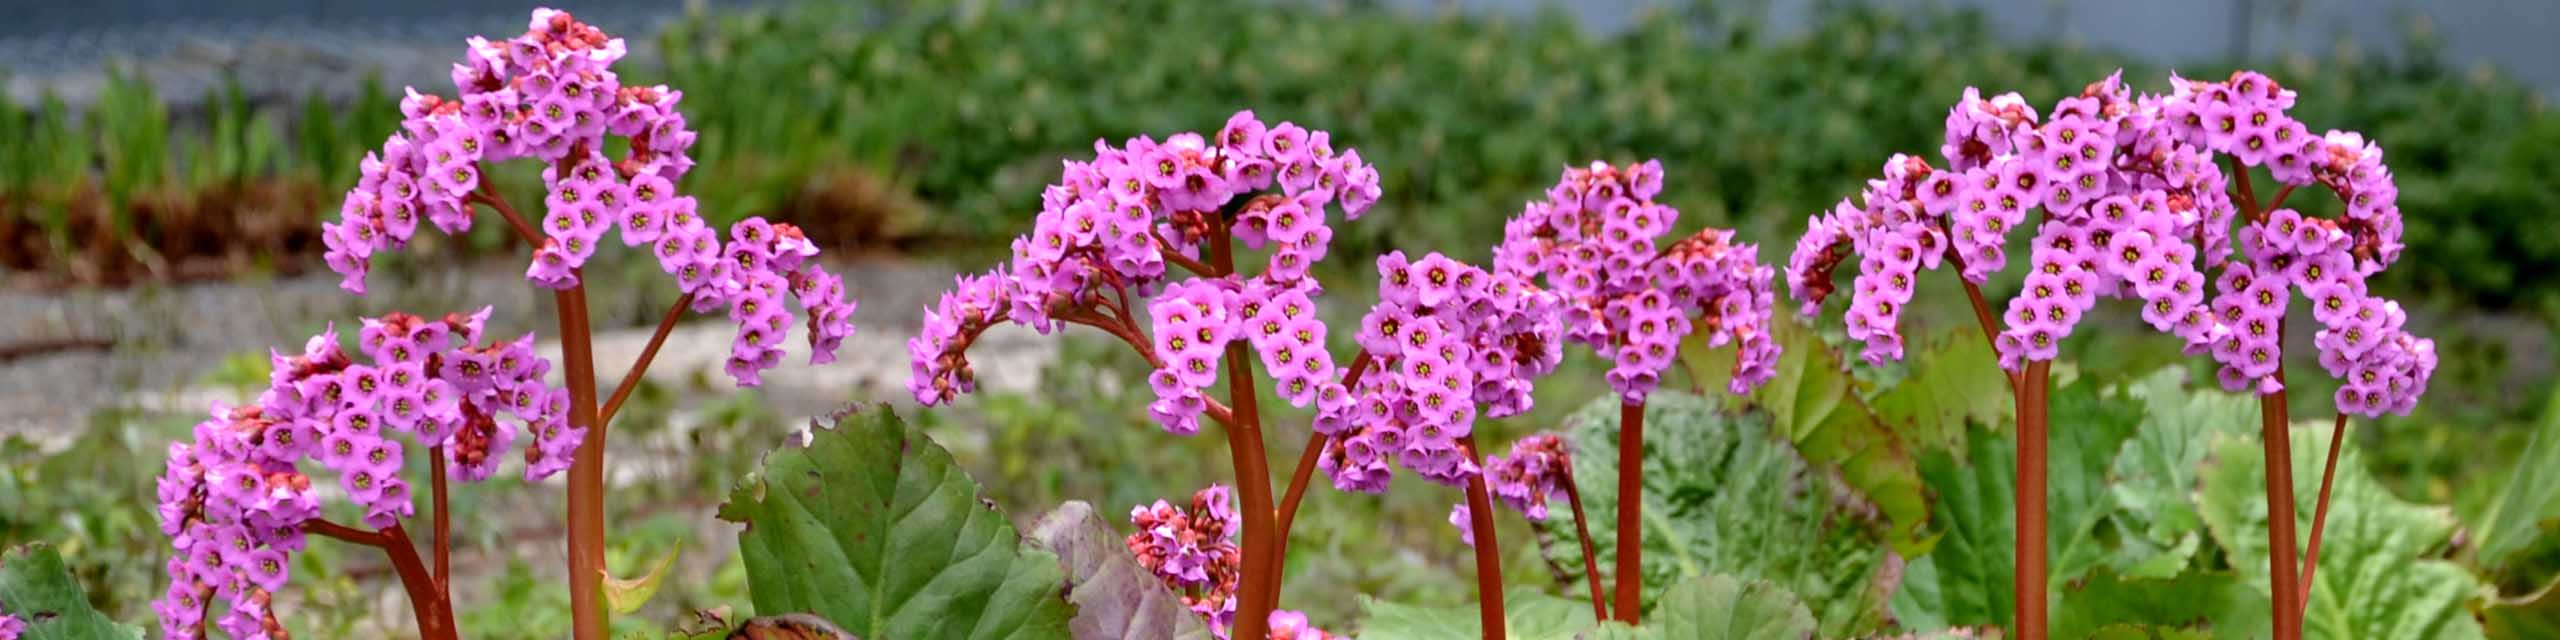 Purple flowers and flower stalks of bergenia plants.